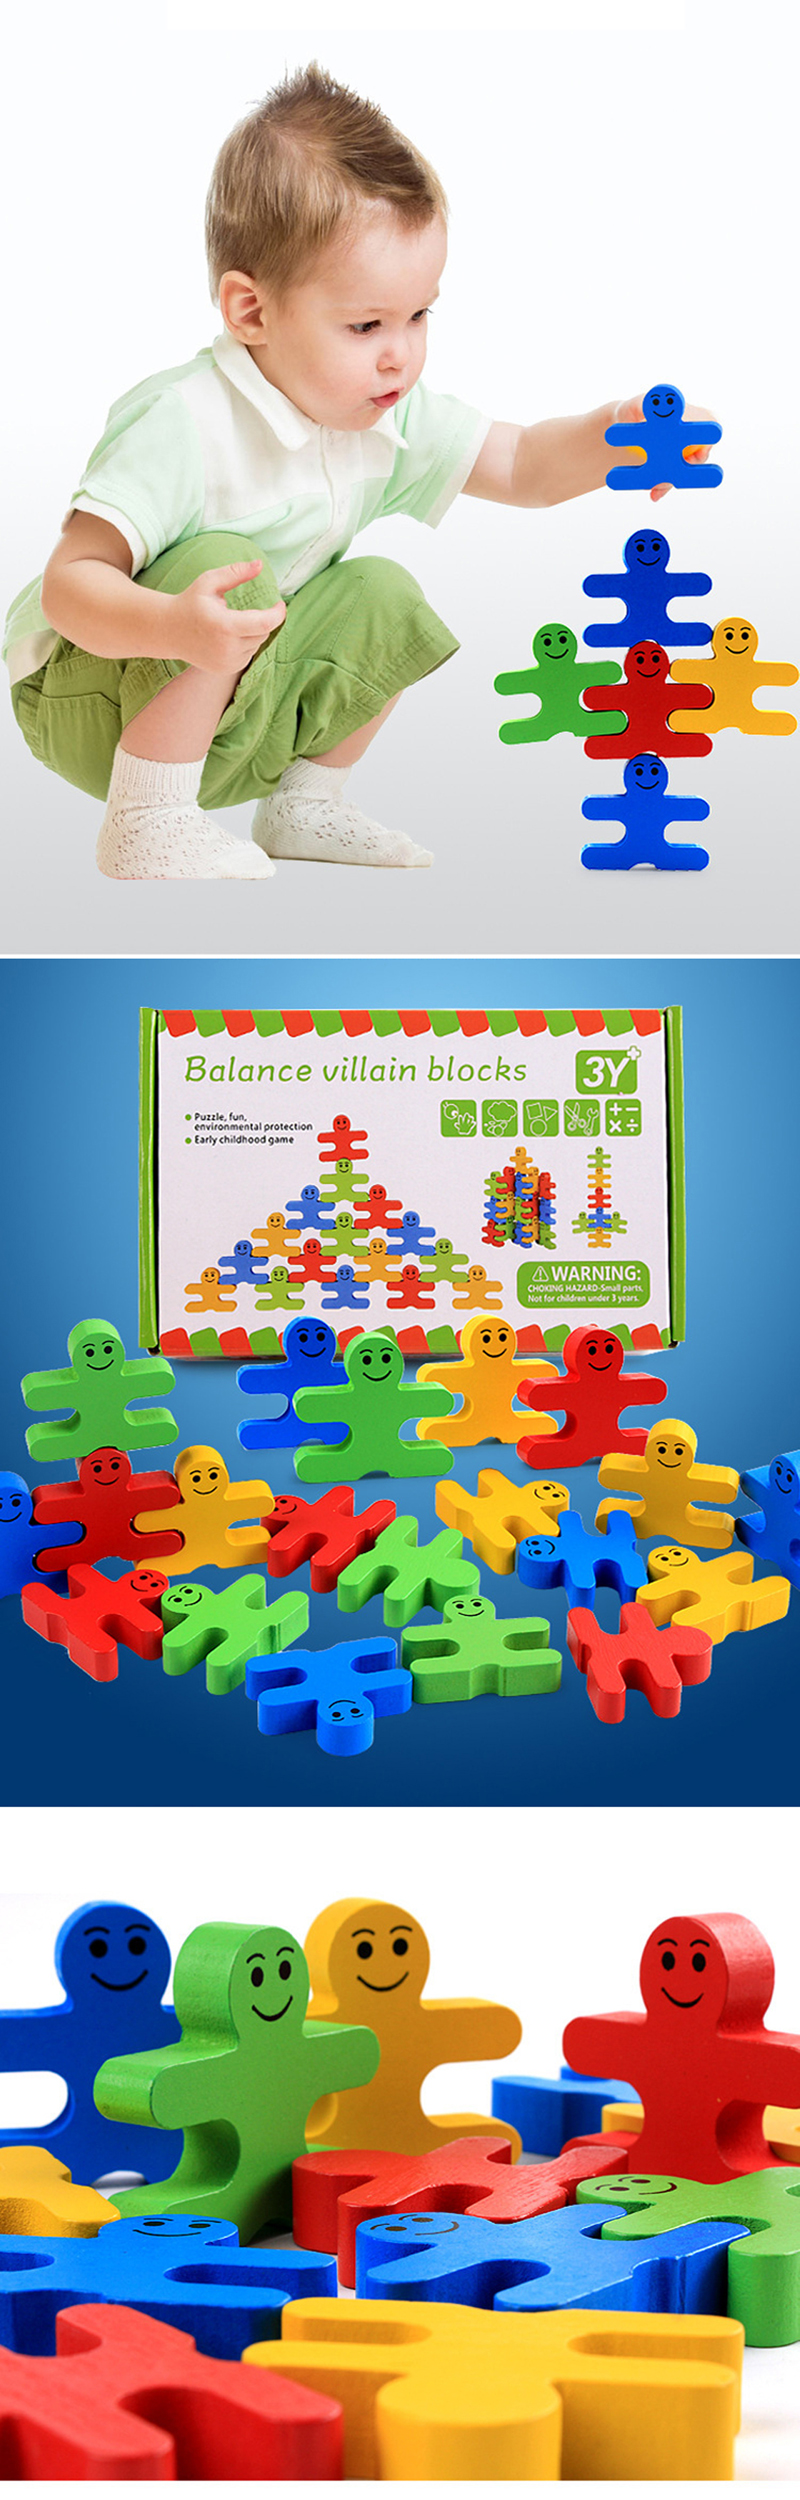 Wooden-Creative-Cartoon-Balance-Building-Blocks-Childrens-Educational-Wooden-Blocks-Toys-Kindergarte-1536420-1